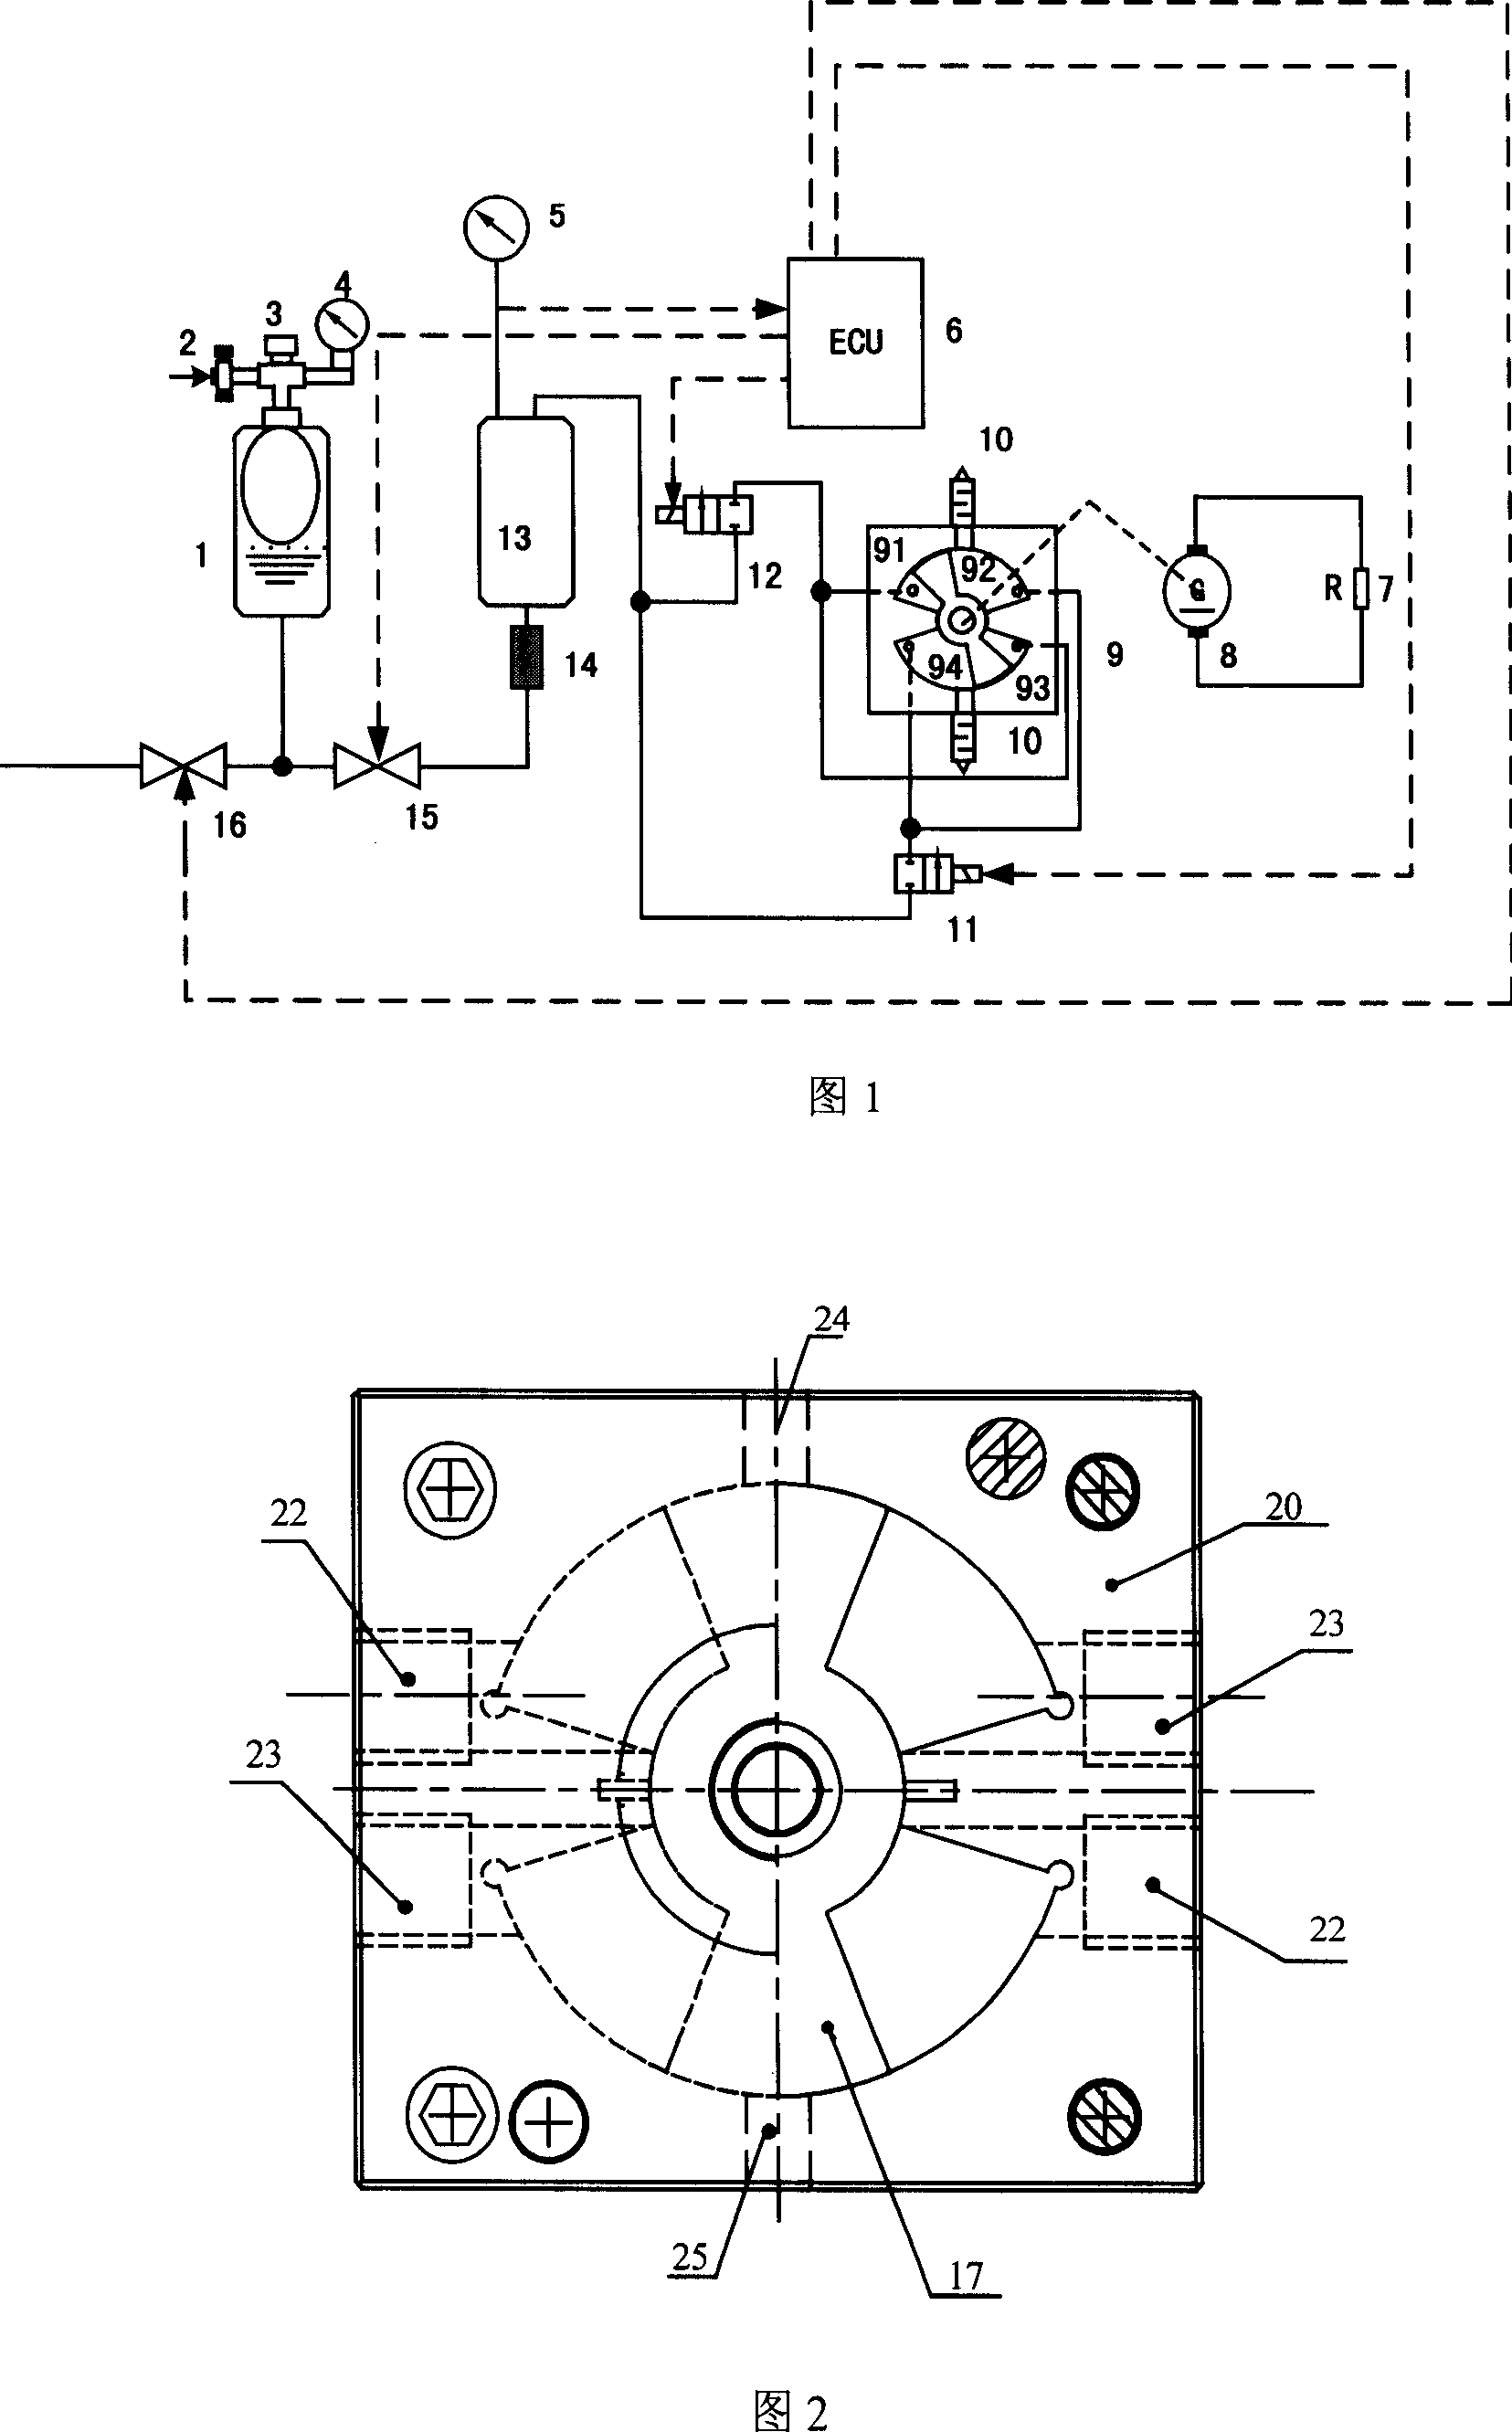 Pulse pendulum type monopropellant engine